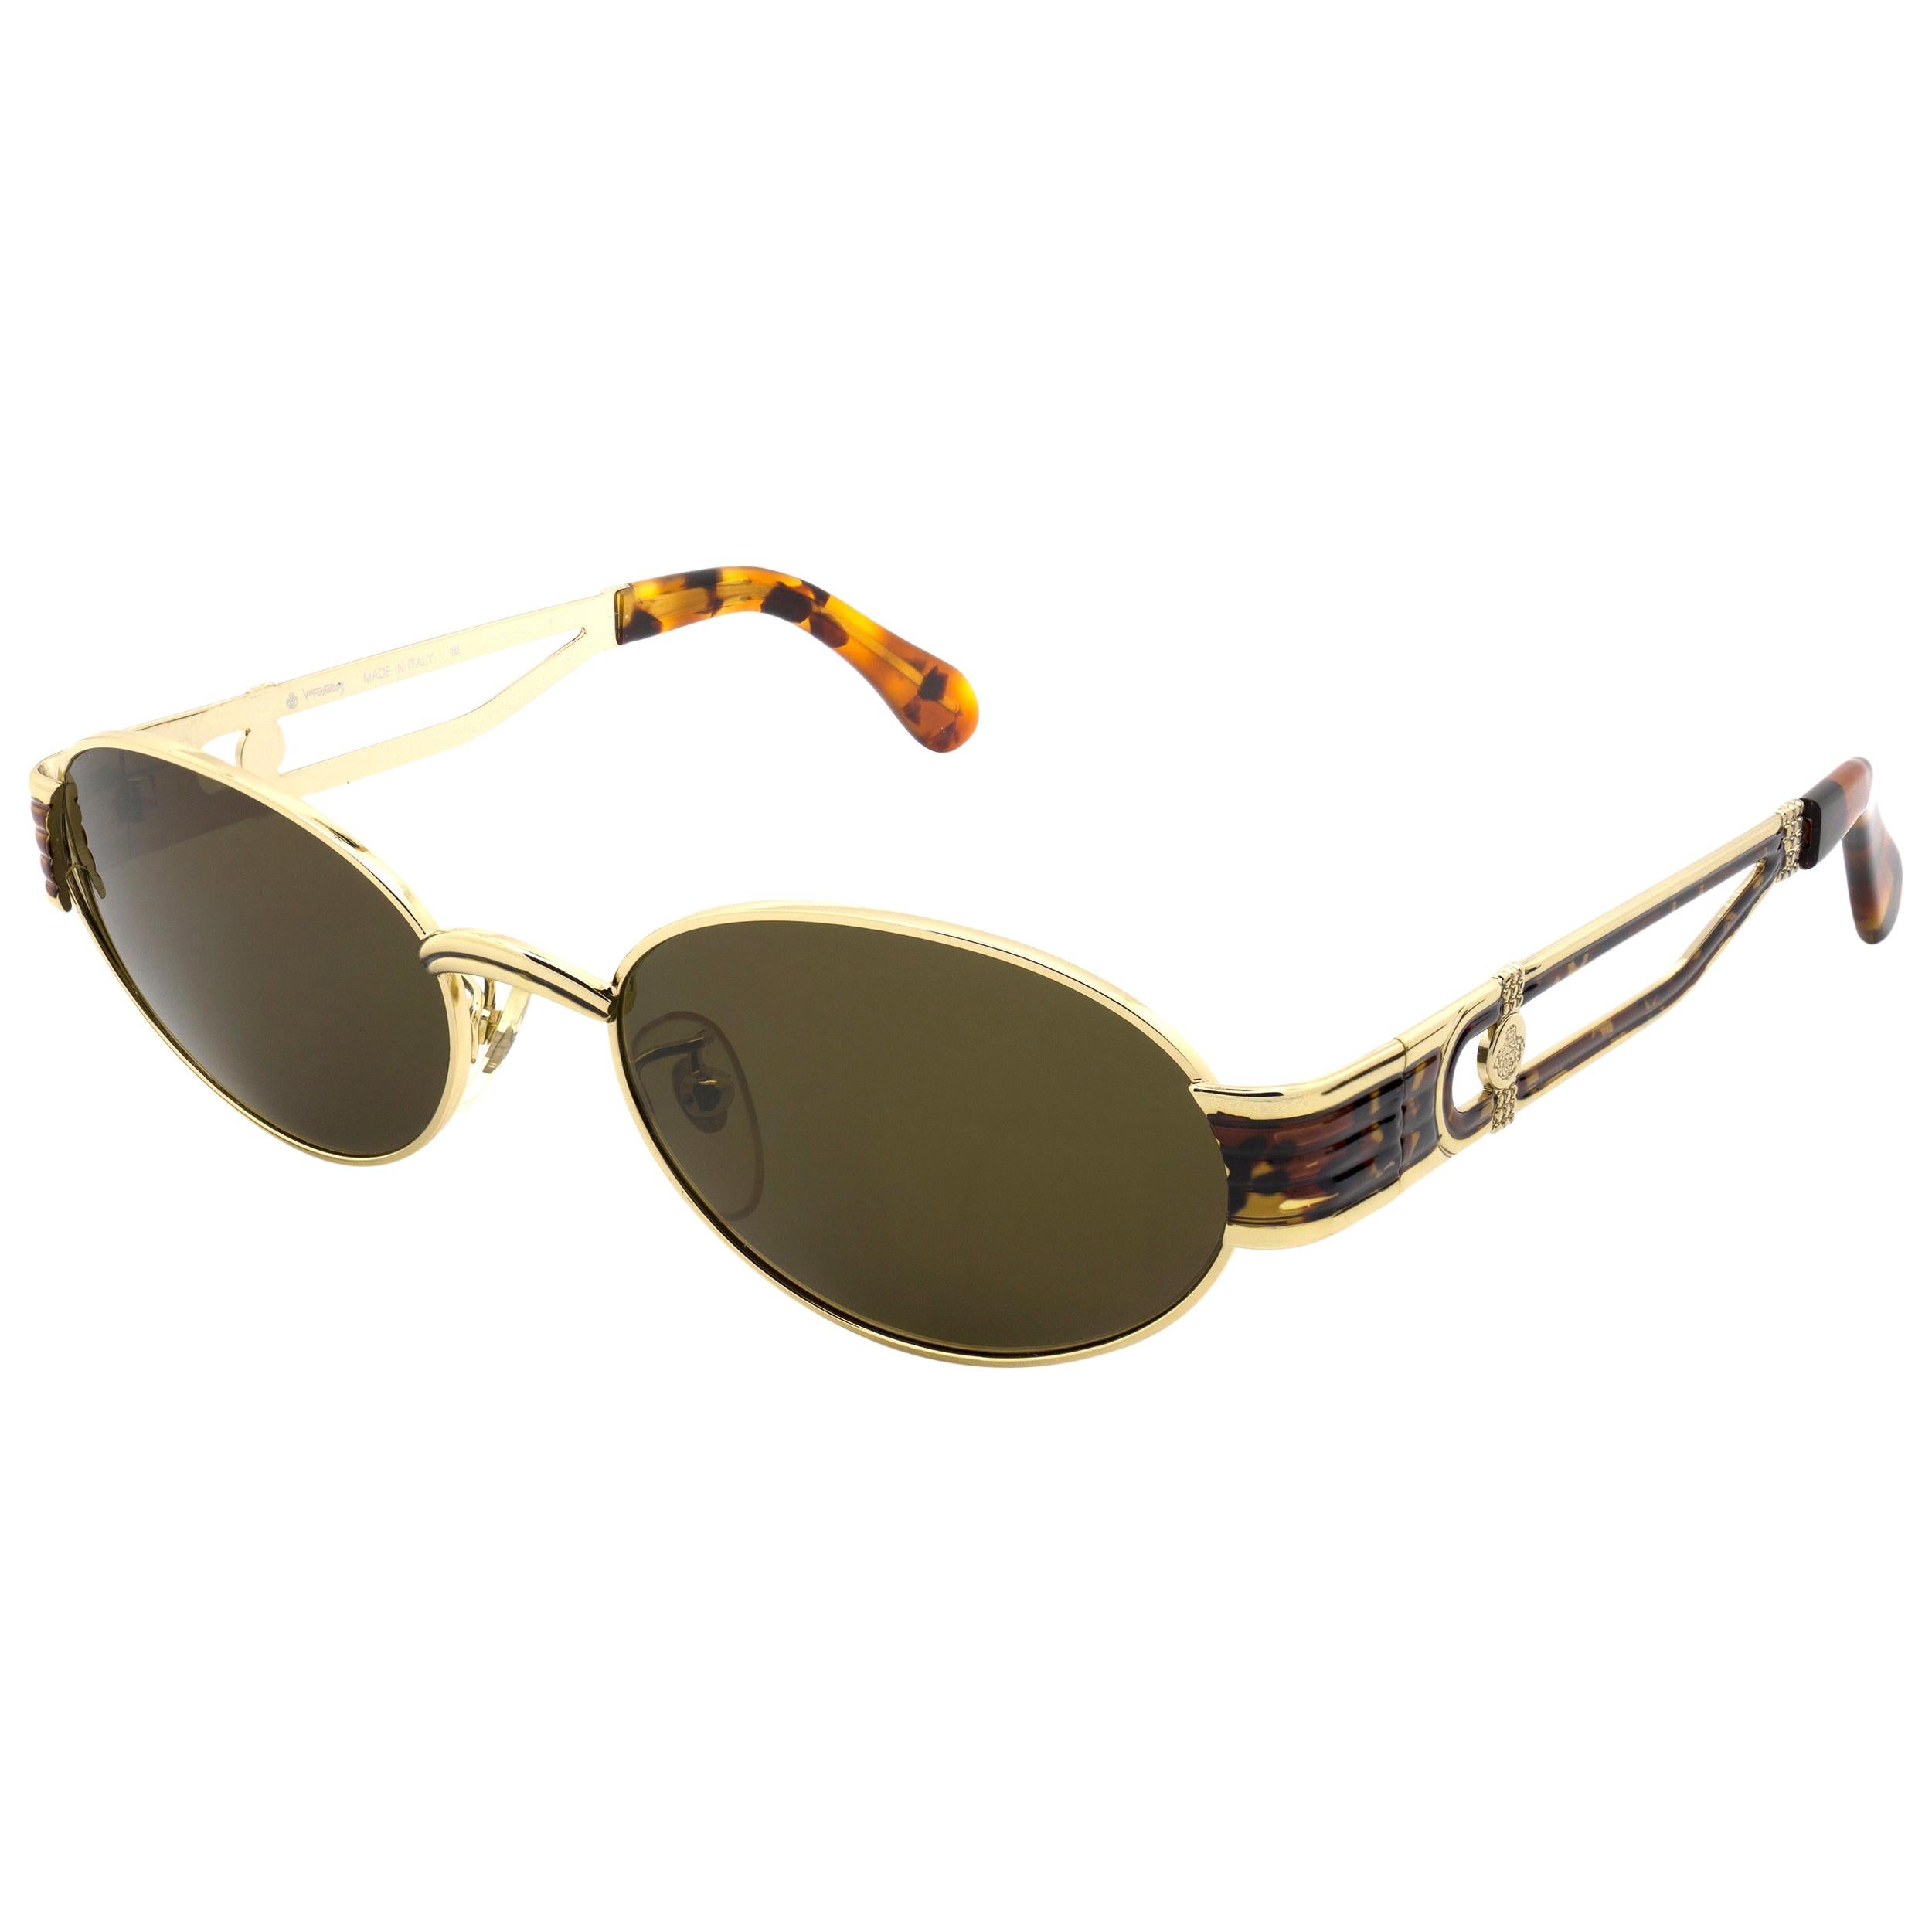 Prince Egon von Furstenberg vintage sunglasses, Italy 80s For Sale